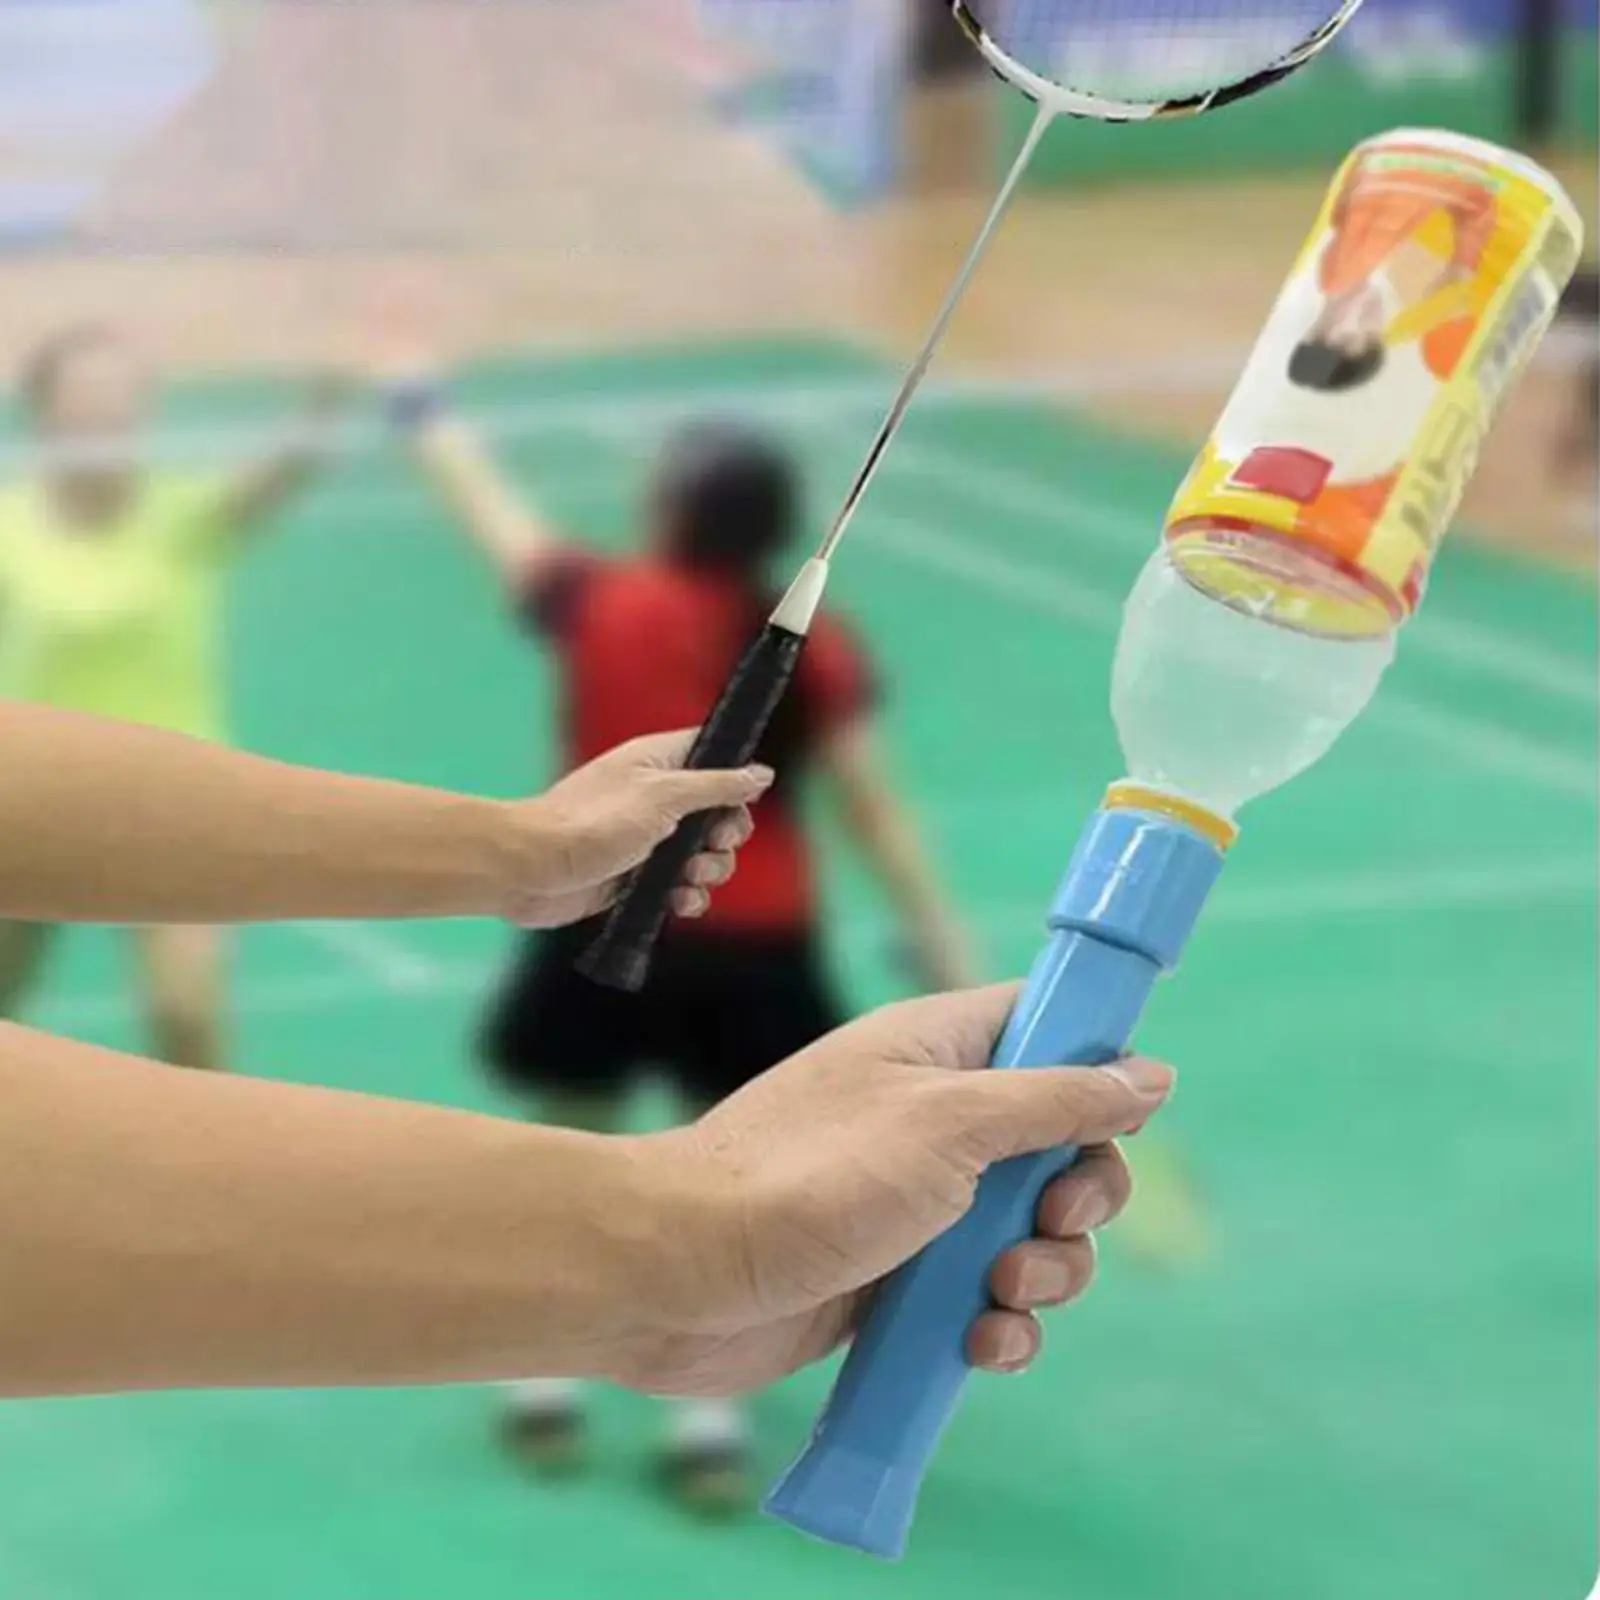 Badminton Power Enhance Grip Wrist Force Supplies Equipment Accessories for Beginners Backyard Indoor Outdoor Sports Kids Beach